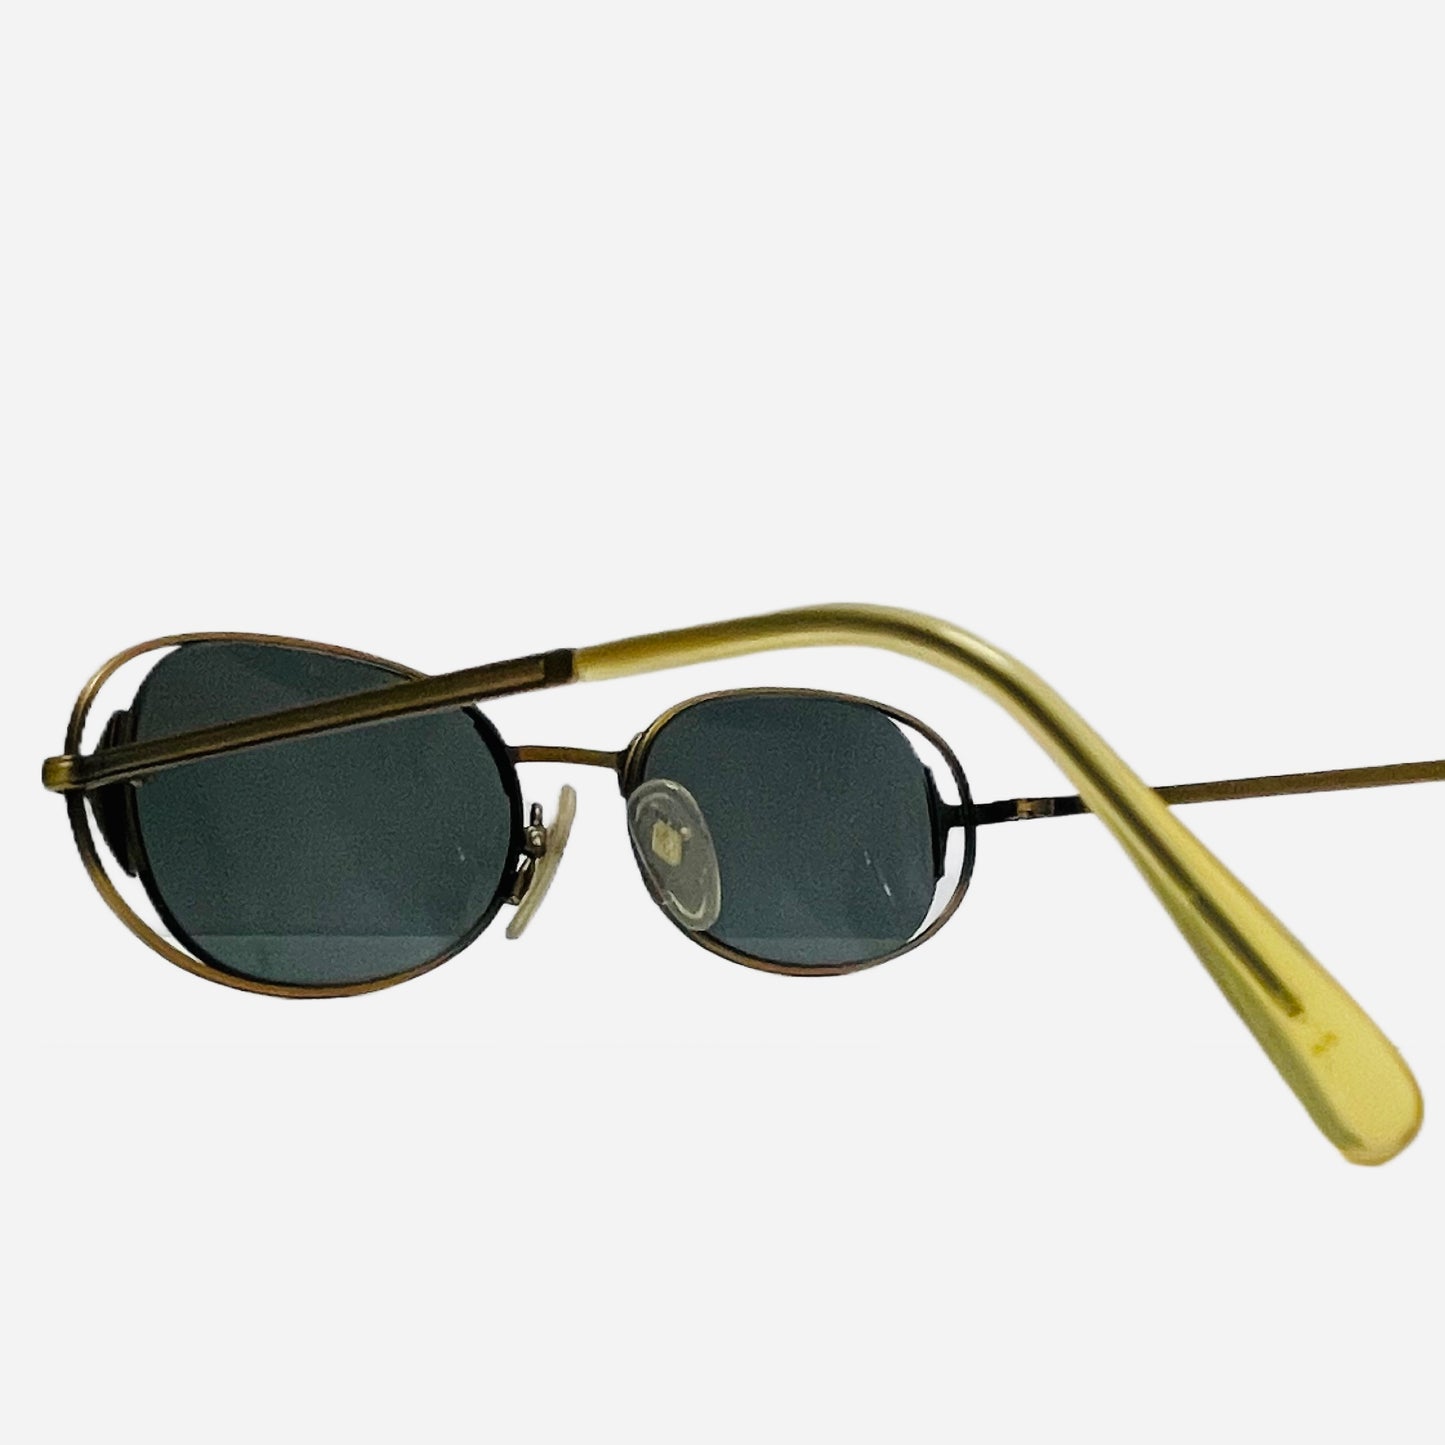 Vintage-Jean-Paul-Gaultier-Sonnenbrille-Sunglasses-Model56-3172-made-in-japan-the-seekers-back-jpg